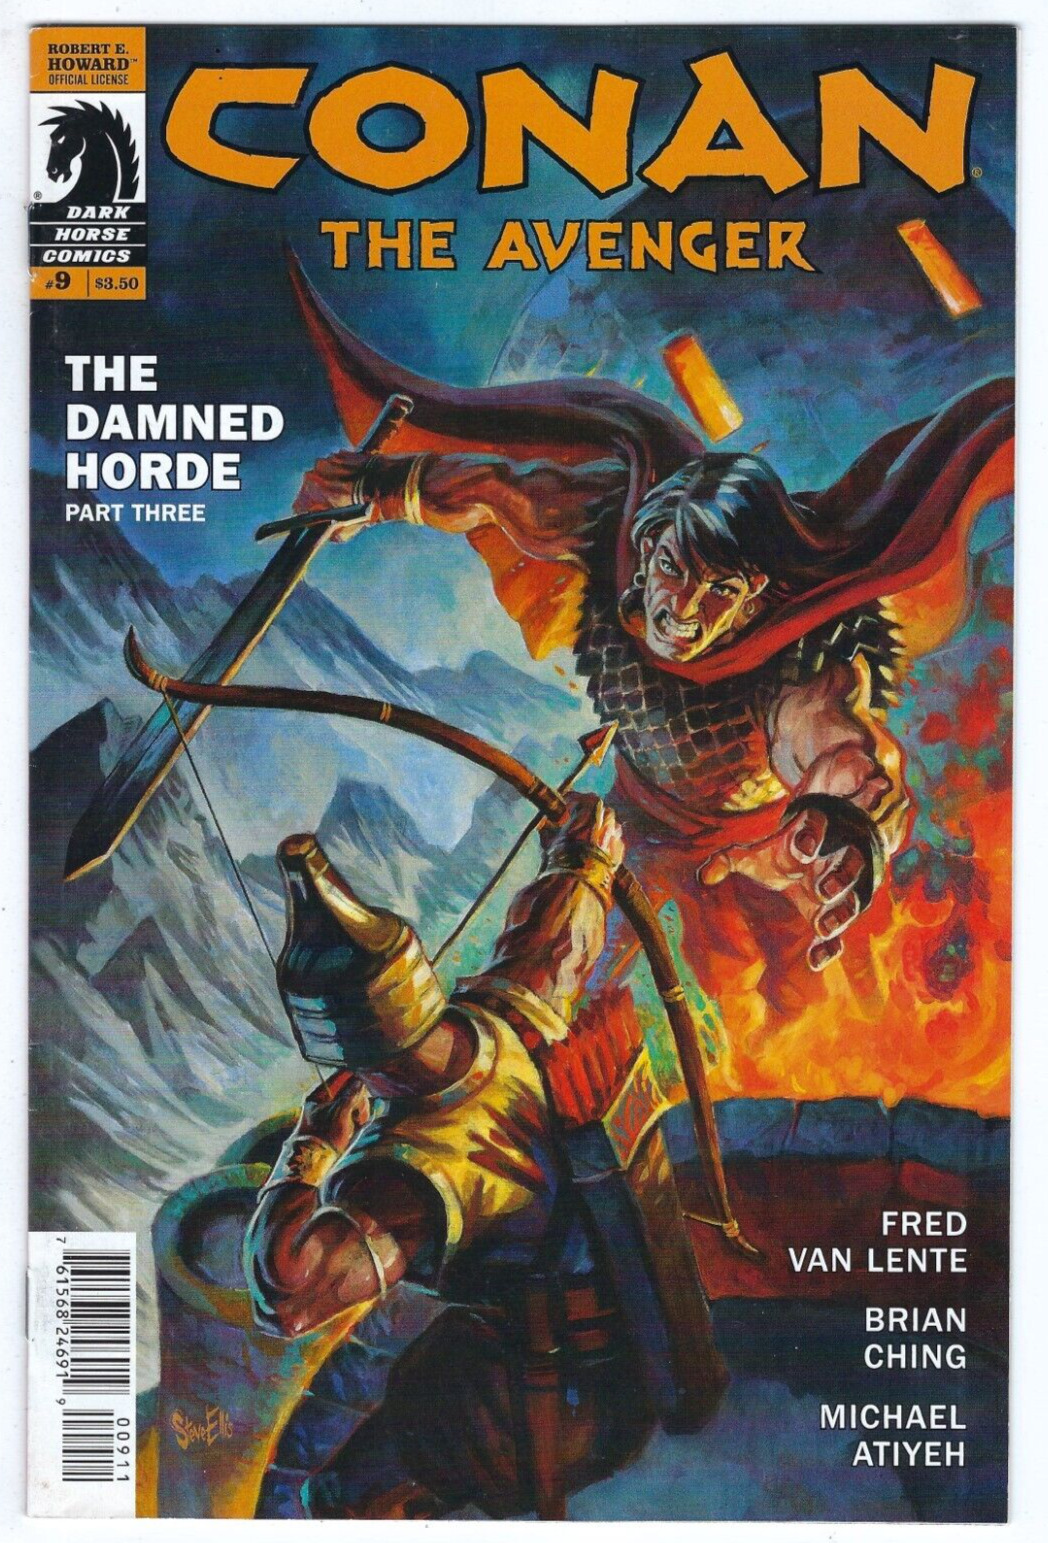 Dark Horse Comics CONAN THE AVENGER #9 first printing cover A